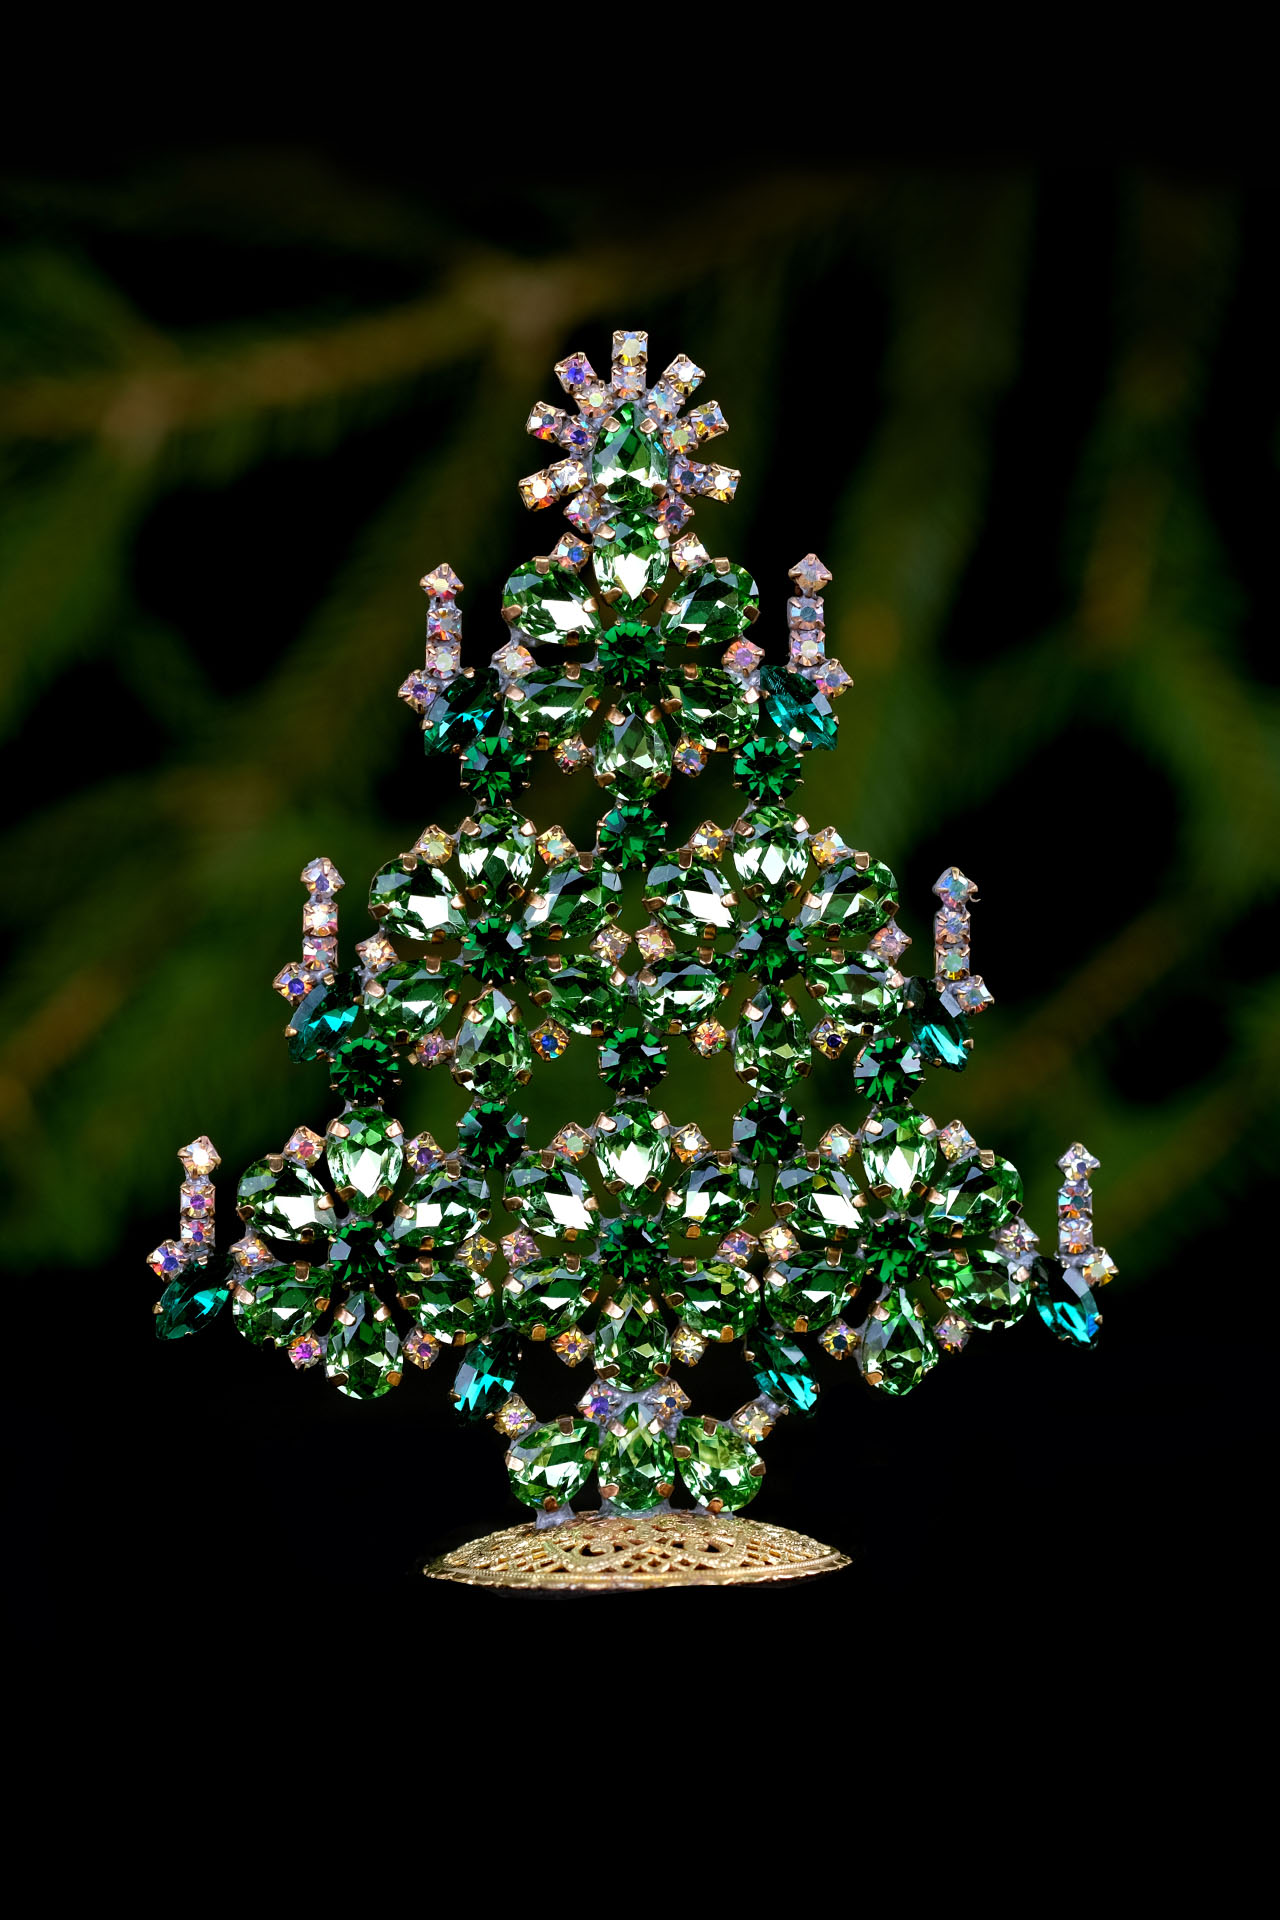 Flowery Christmas Tree, boasting beautiful tree decorations.